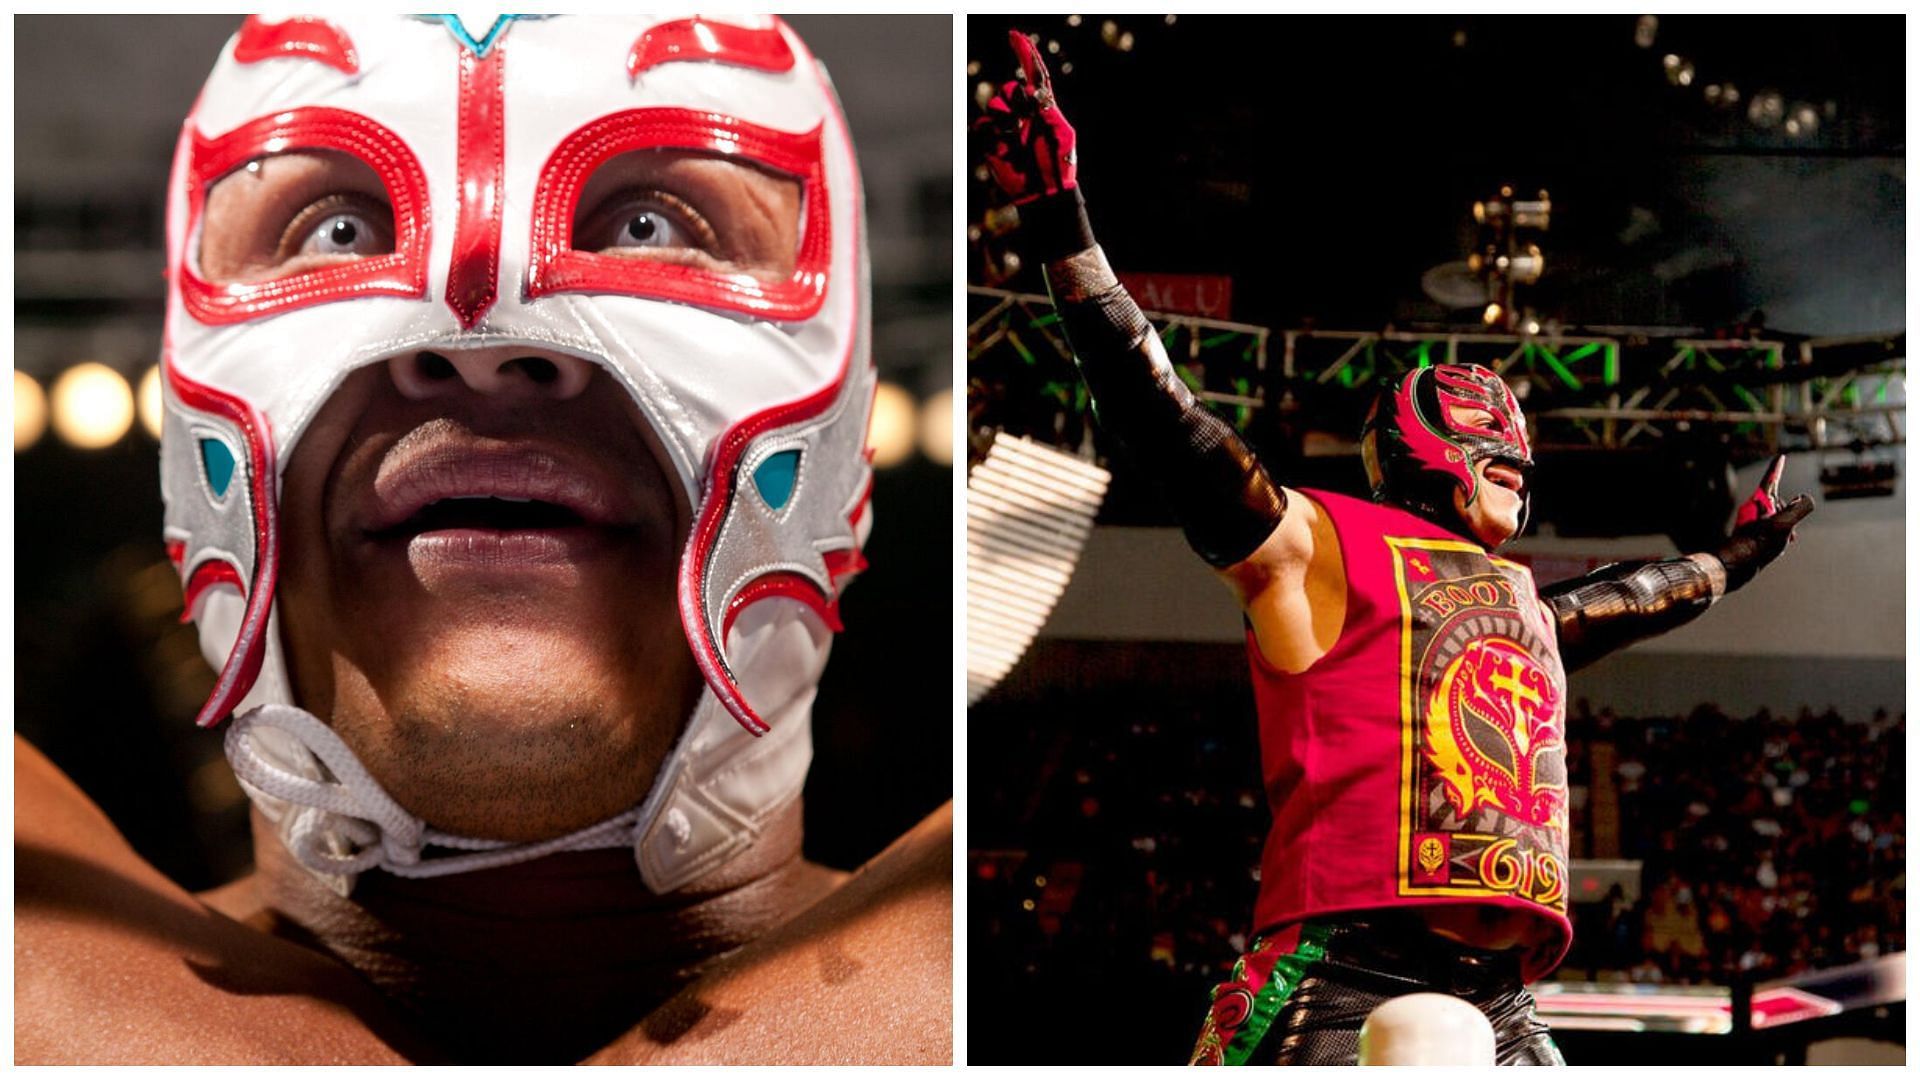 Rey Mysterio is former WWE Champion.